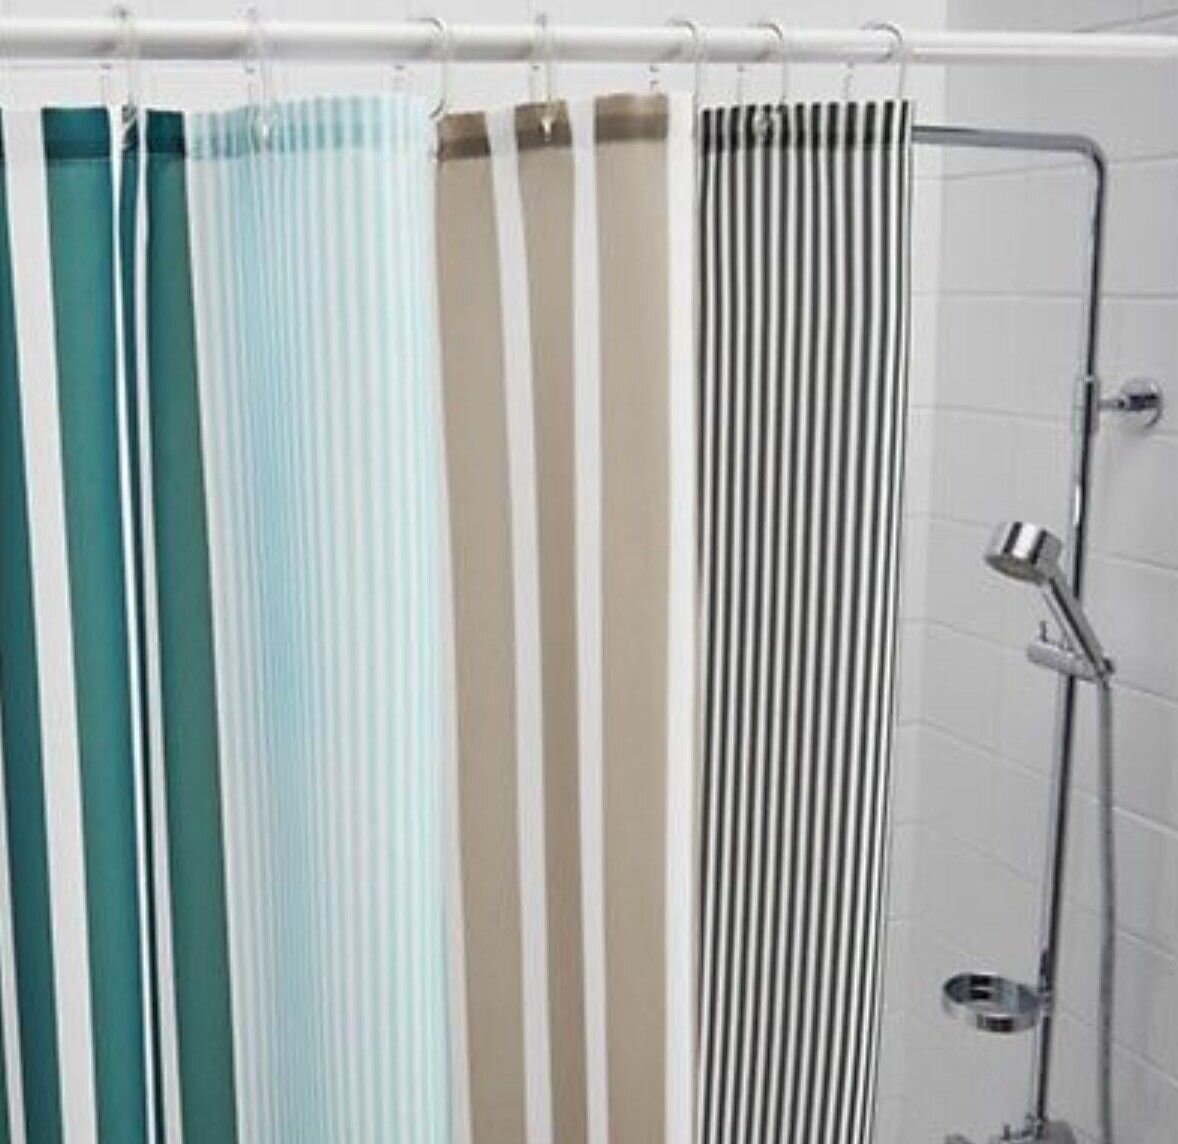 Ikea Shower Curtain for Best Your Bathroom Decoration: Boys Shower Curtains | Ikea Shower Curtain | Clear Pvc Shower Curtain